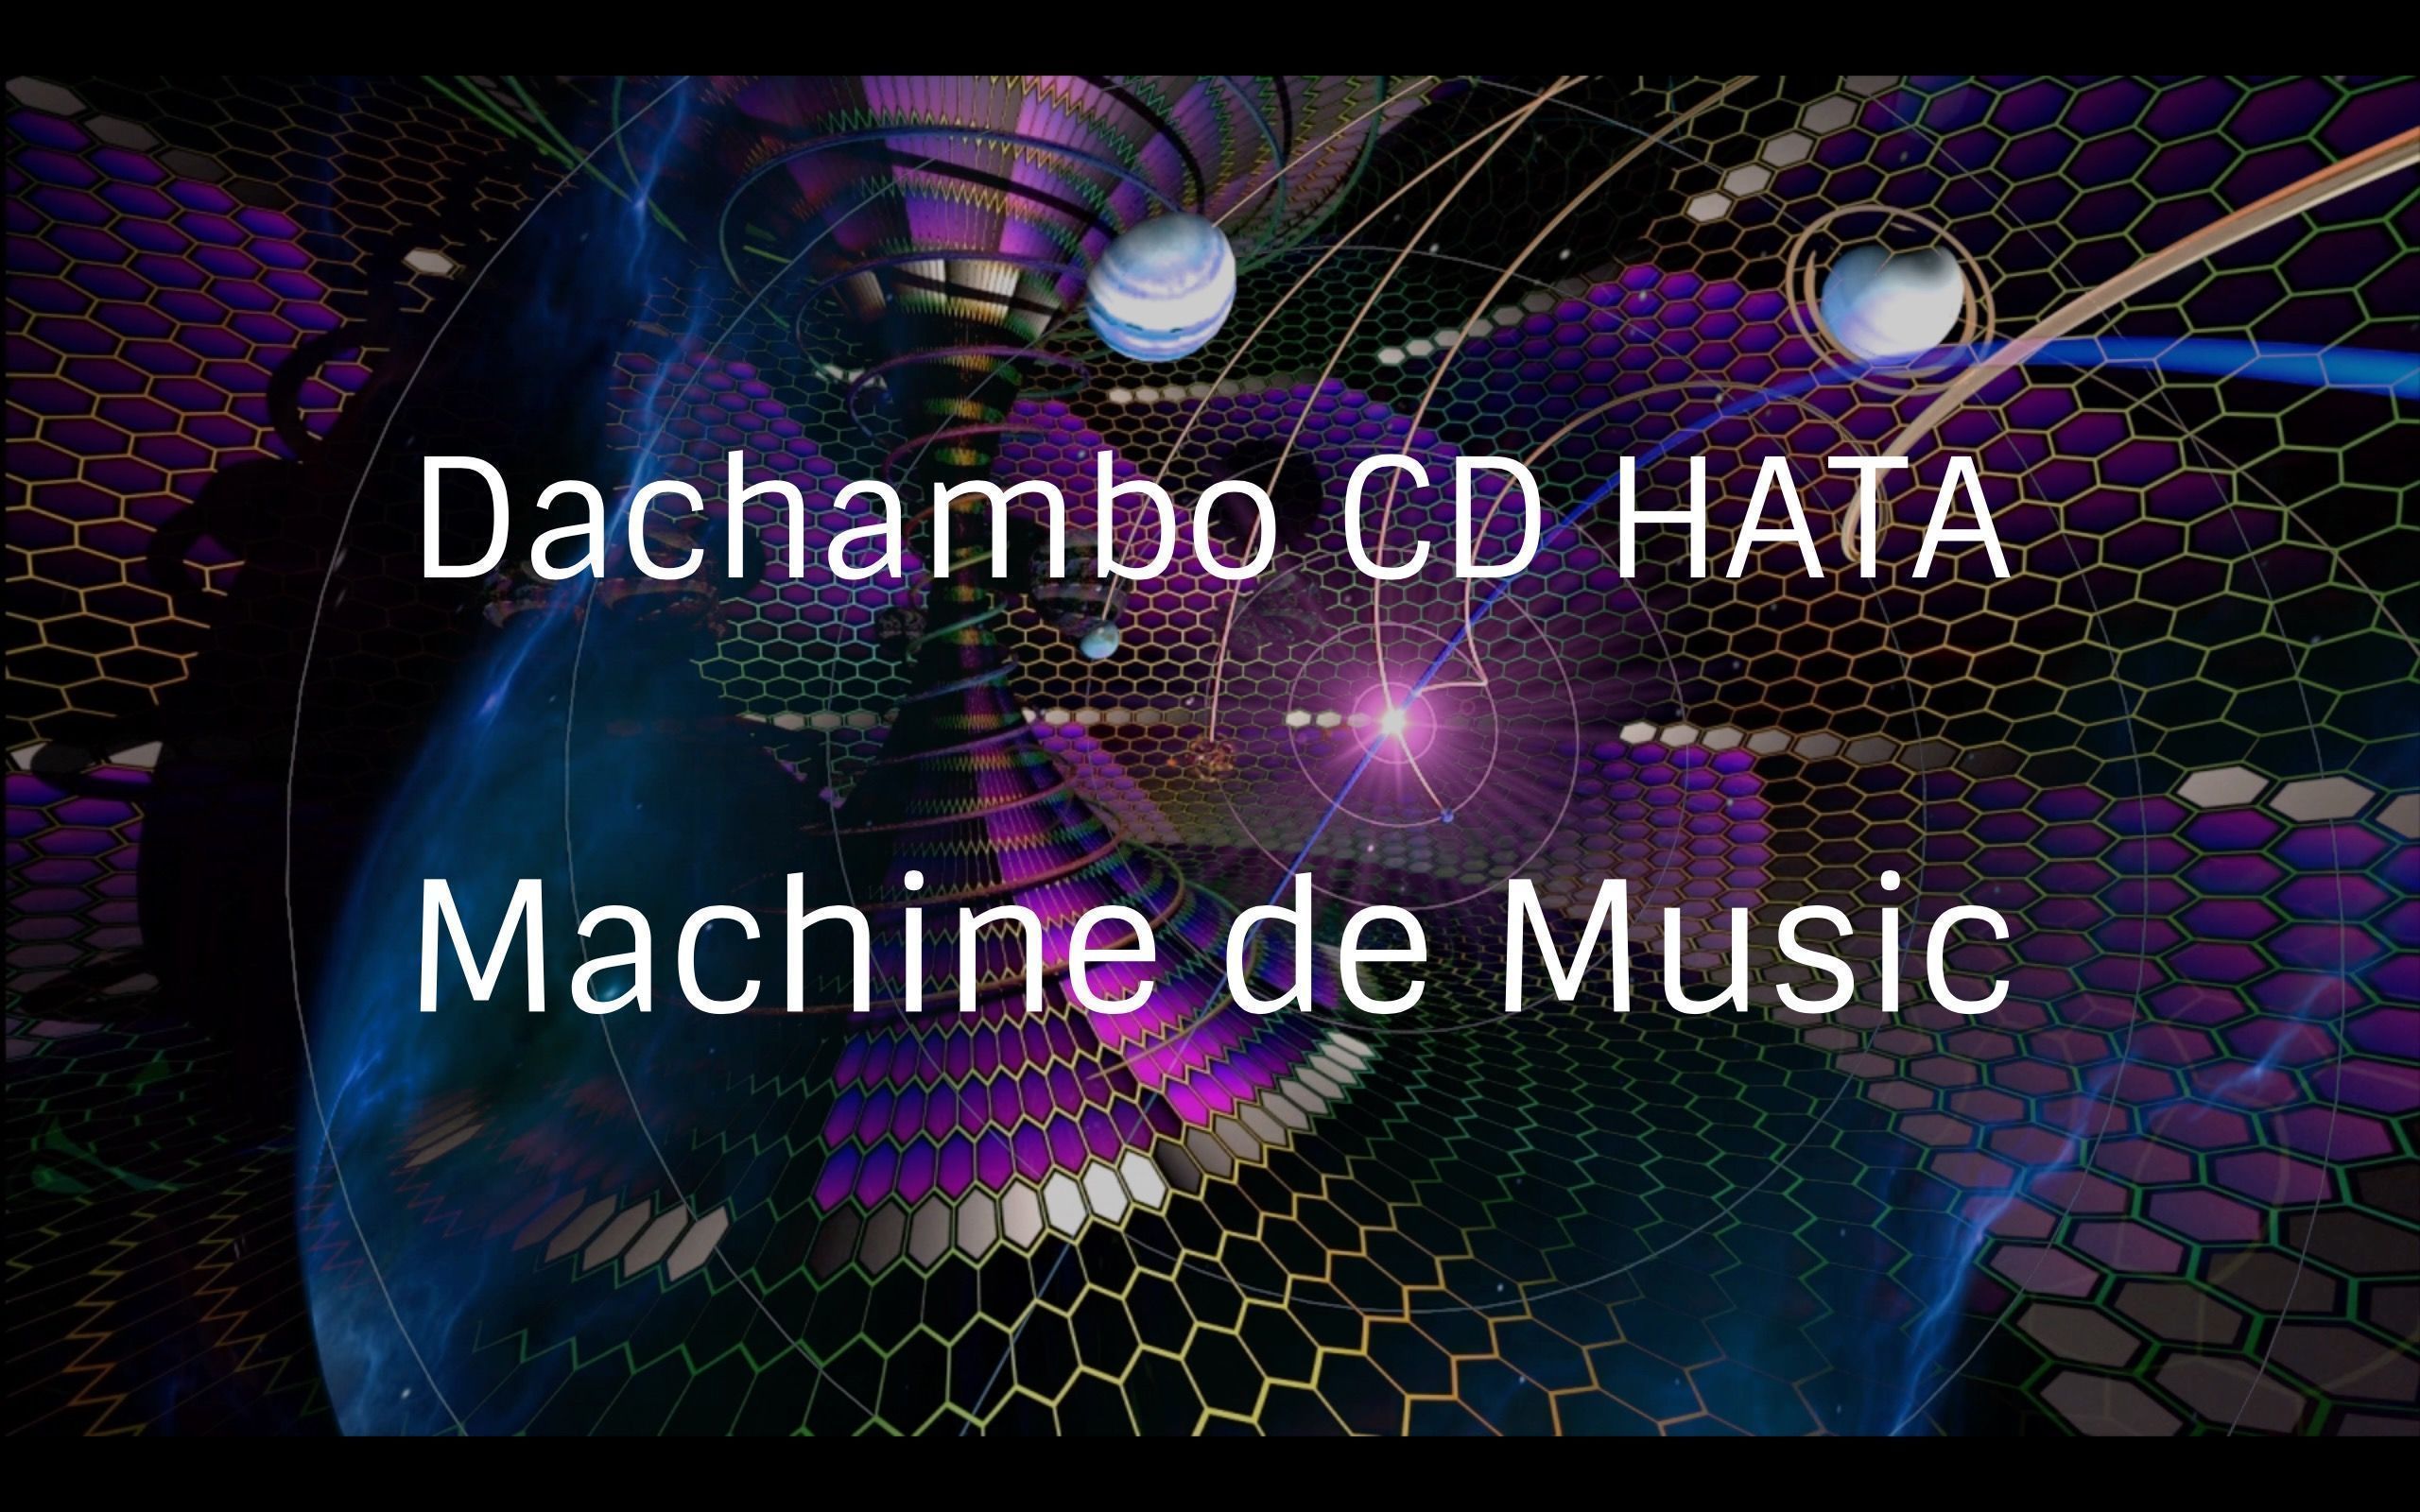 Dachambo CD HATAのMachine de Music コラムVol.65 MUTEK.JP 2019 レポをちょこっと